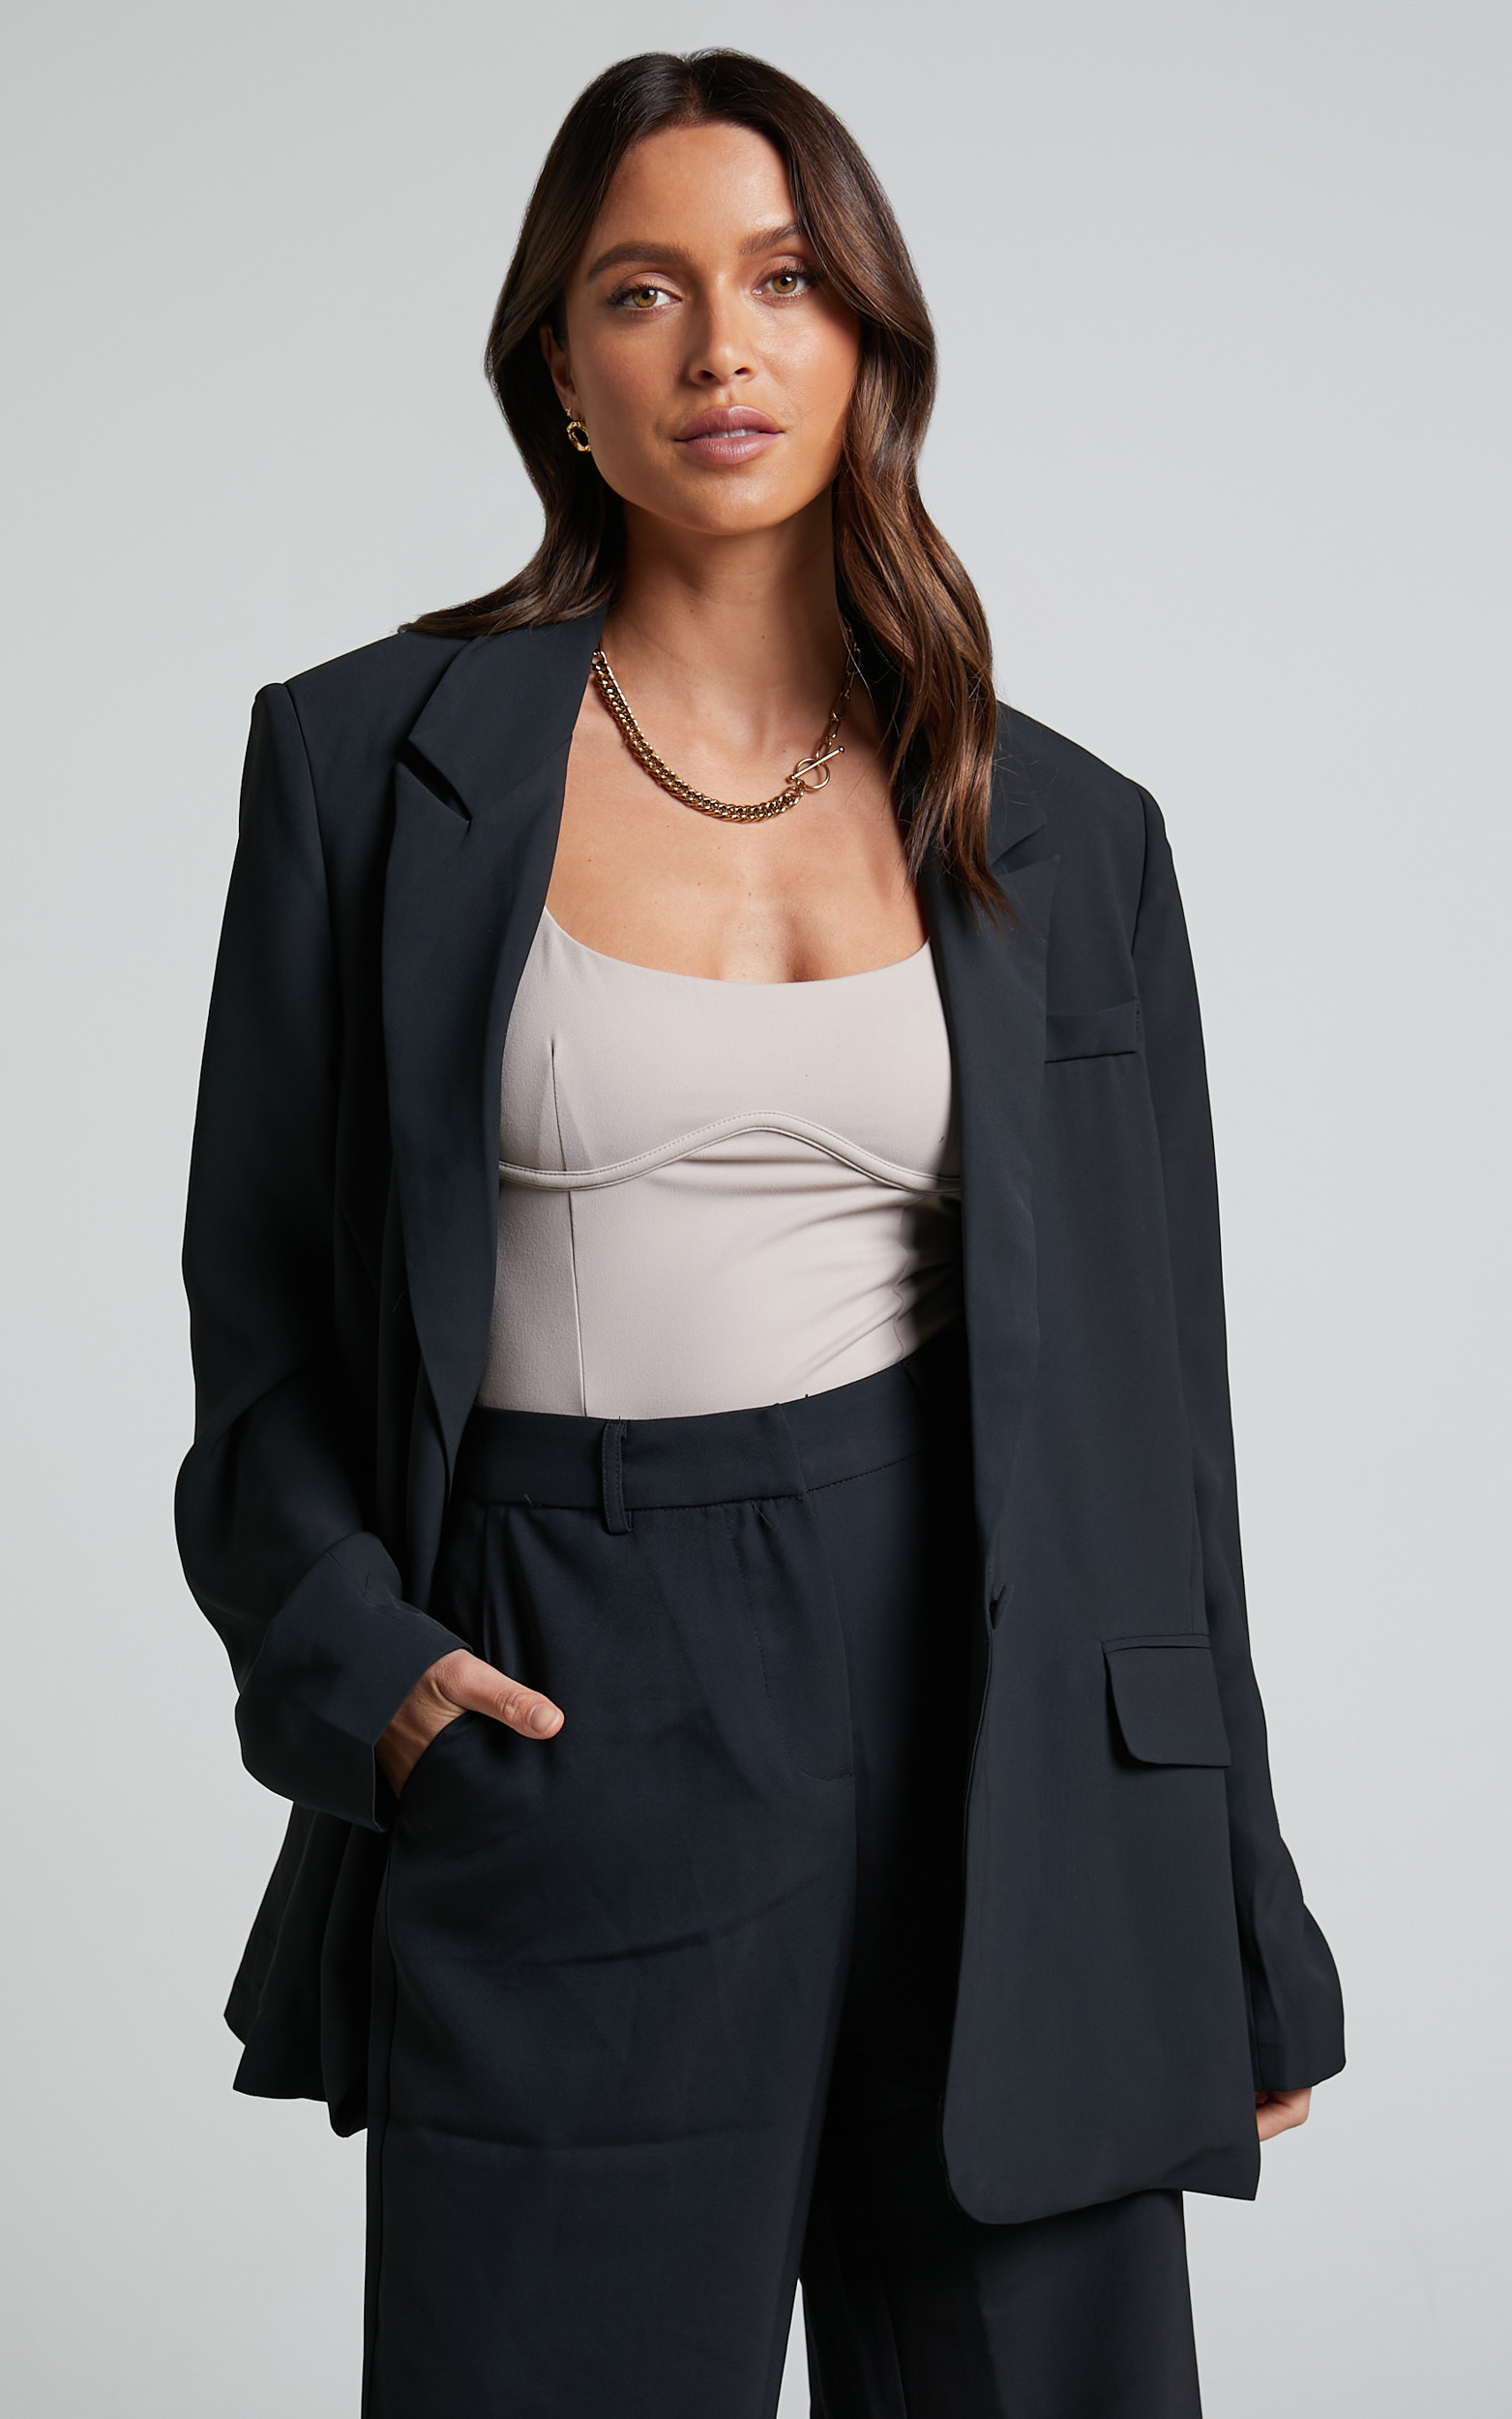 Michelle Oversized Plunge Neck Button Up Blazer in Black - 06, BLK2, hi-res image number null